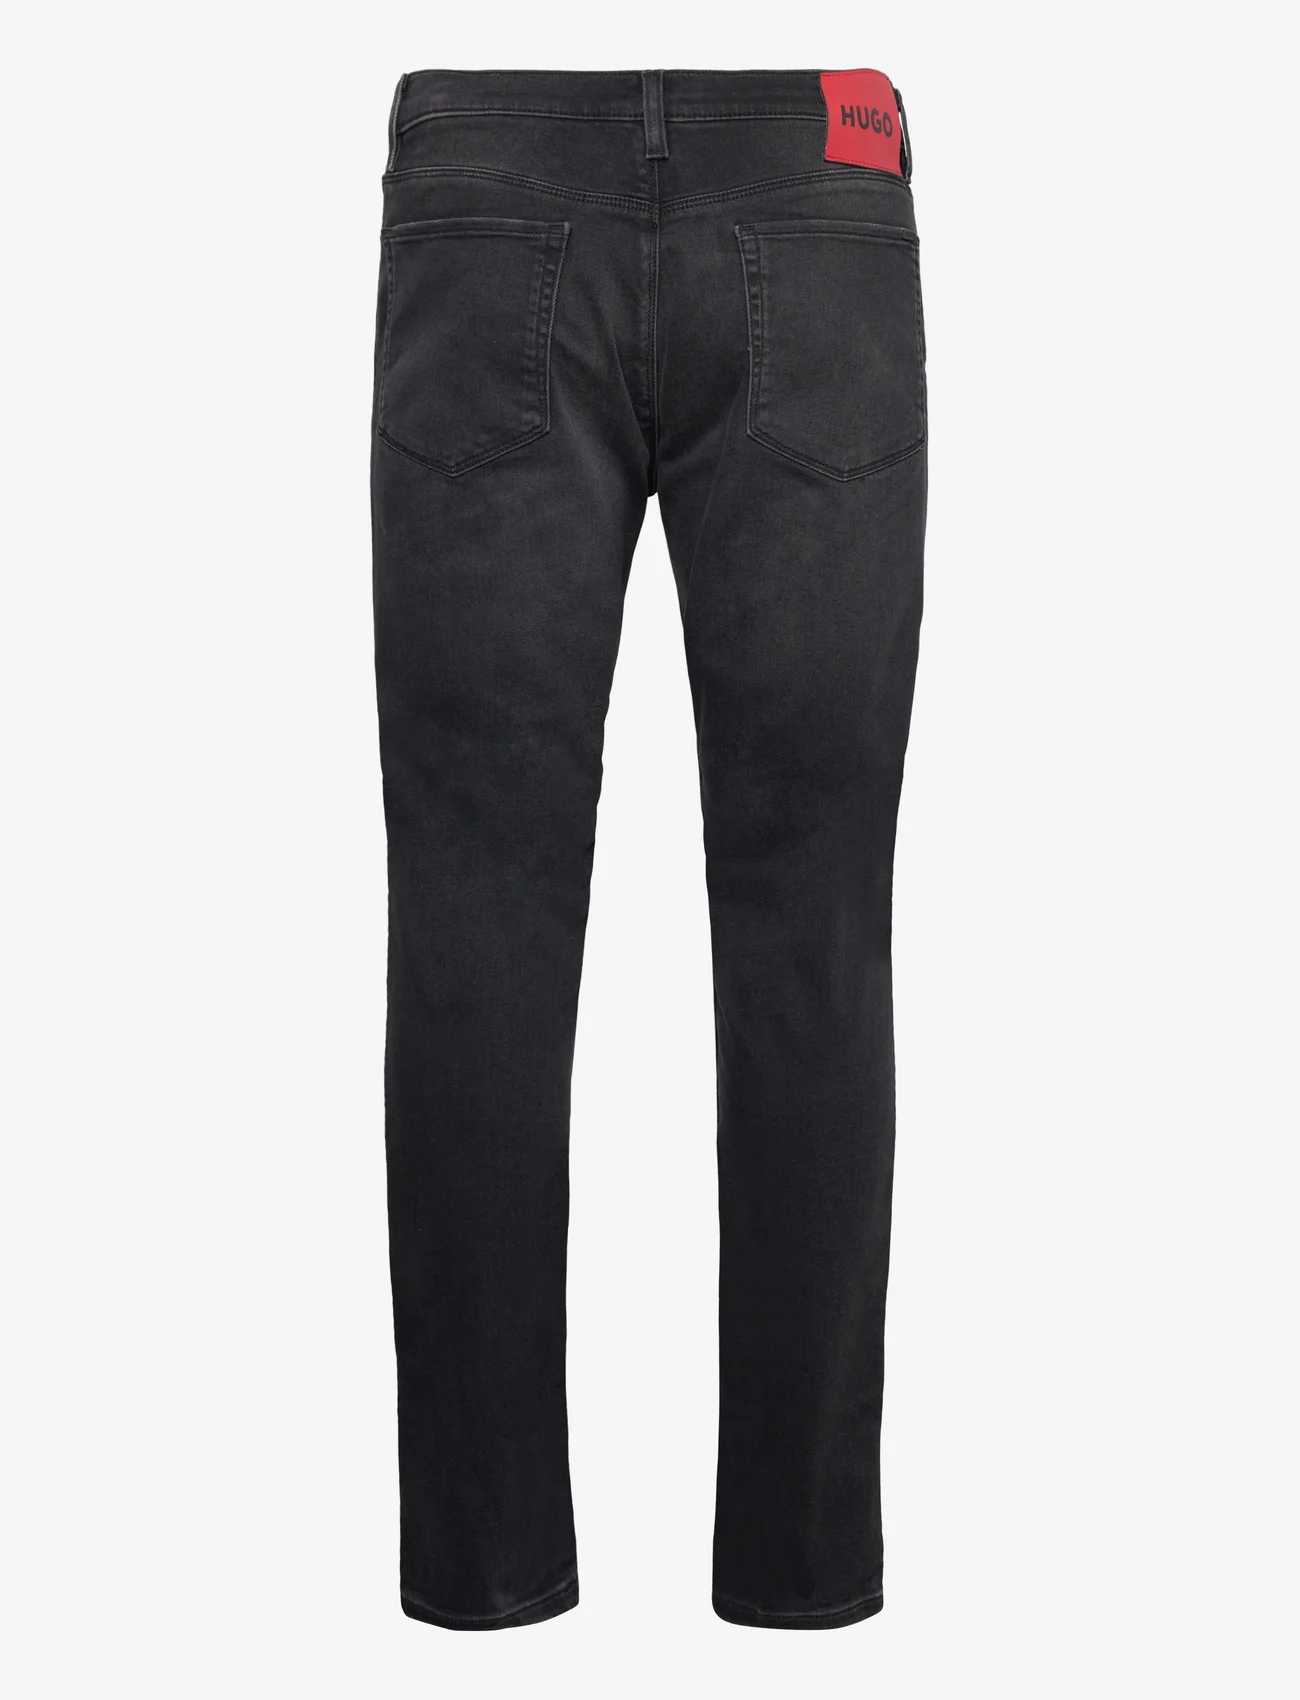 HUGO - HUGO 708 - slim jeans - dark grey - 1